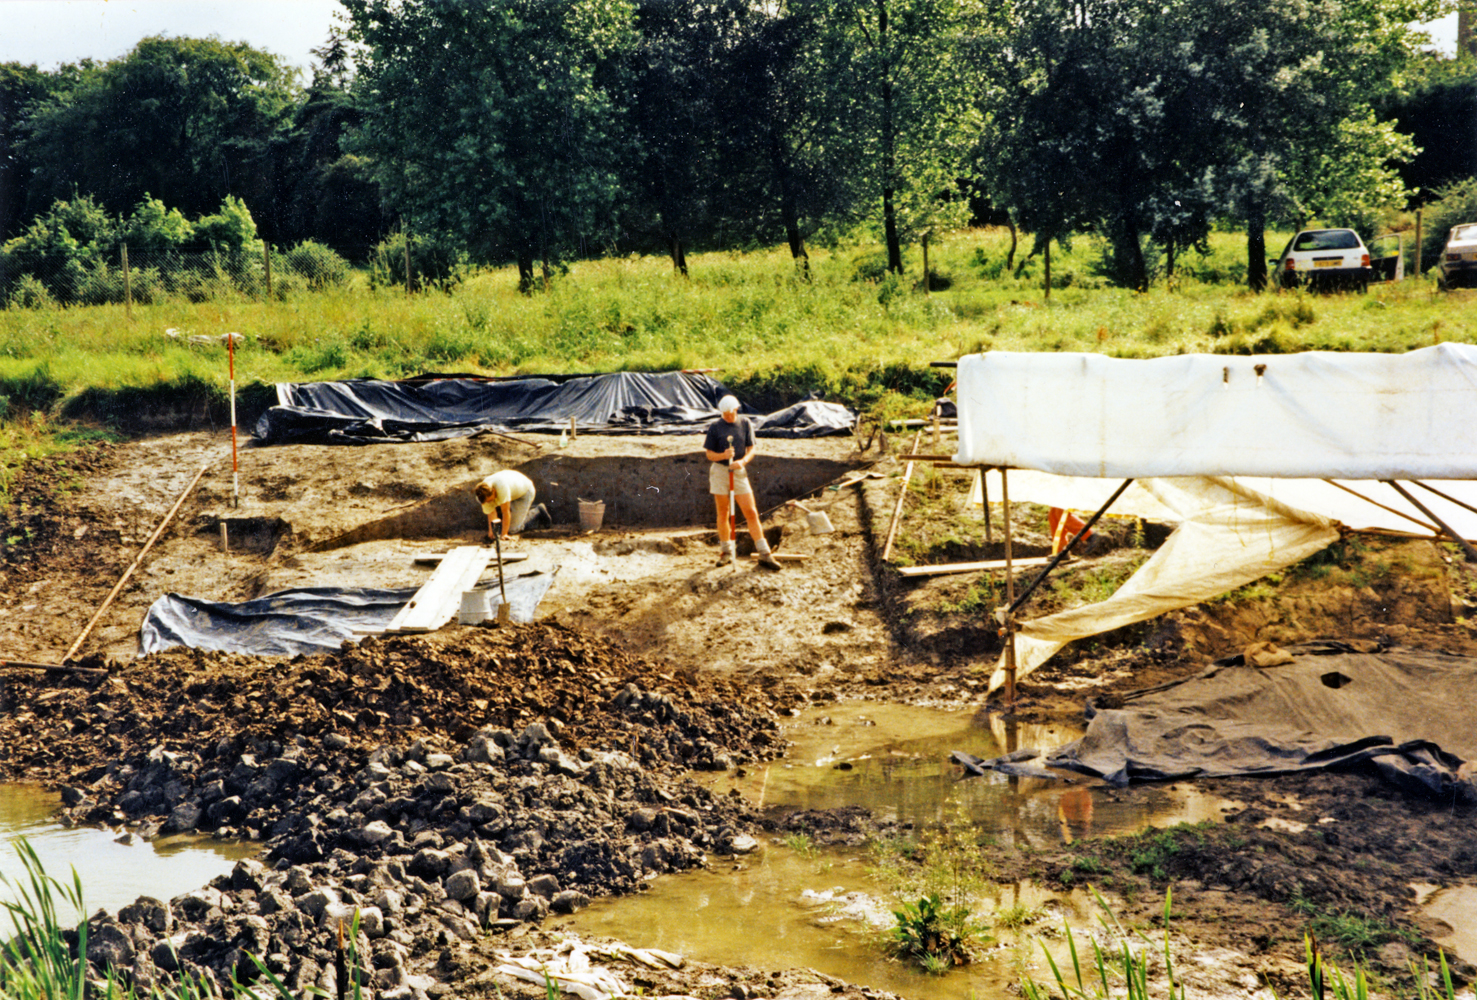 General view of excavation